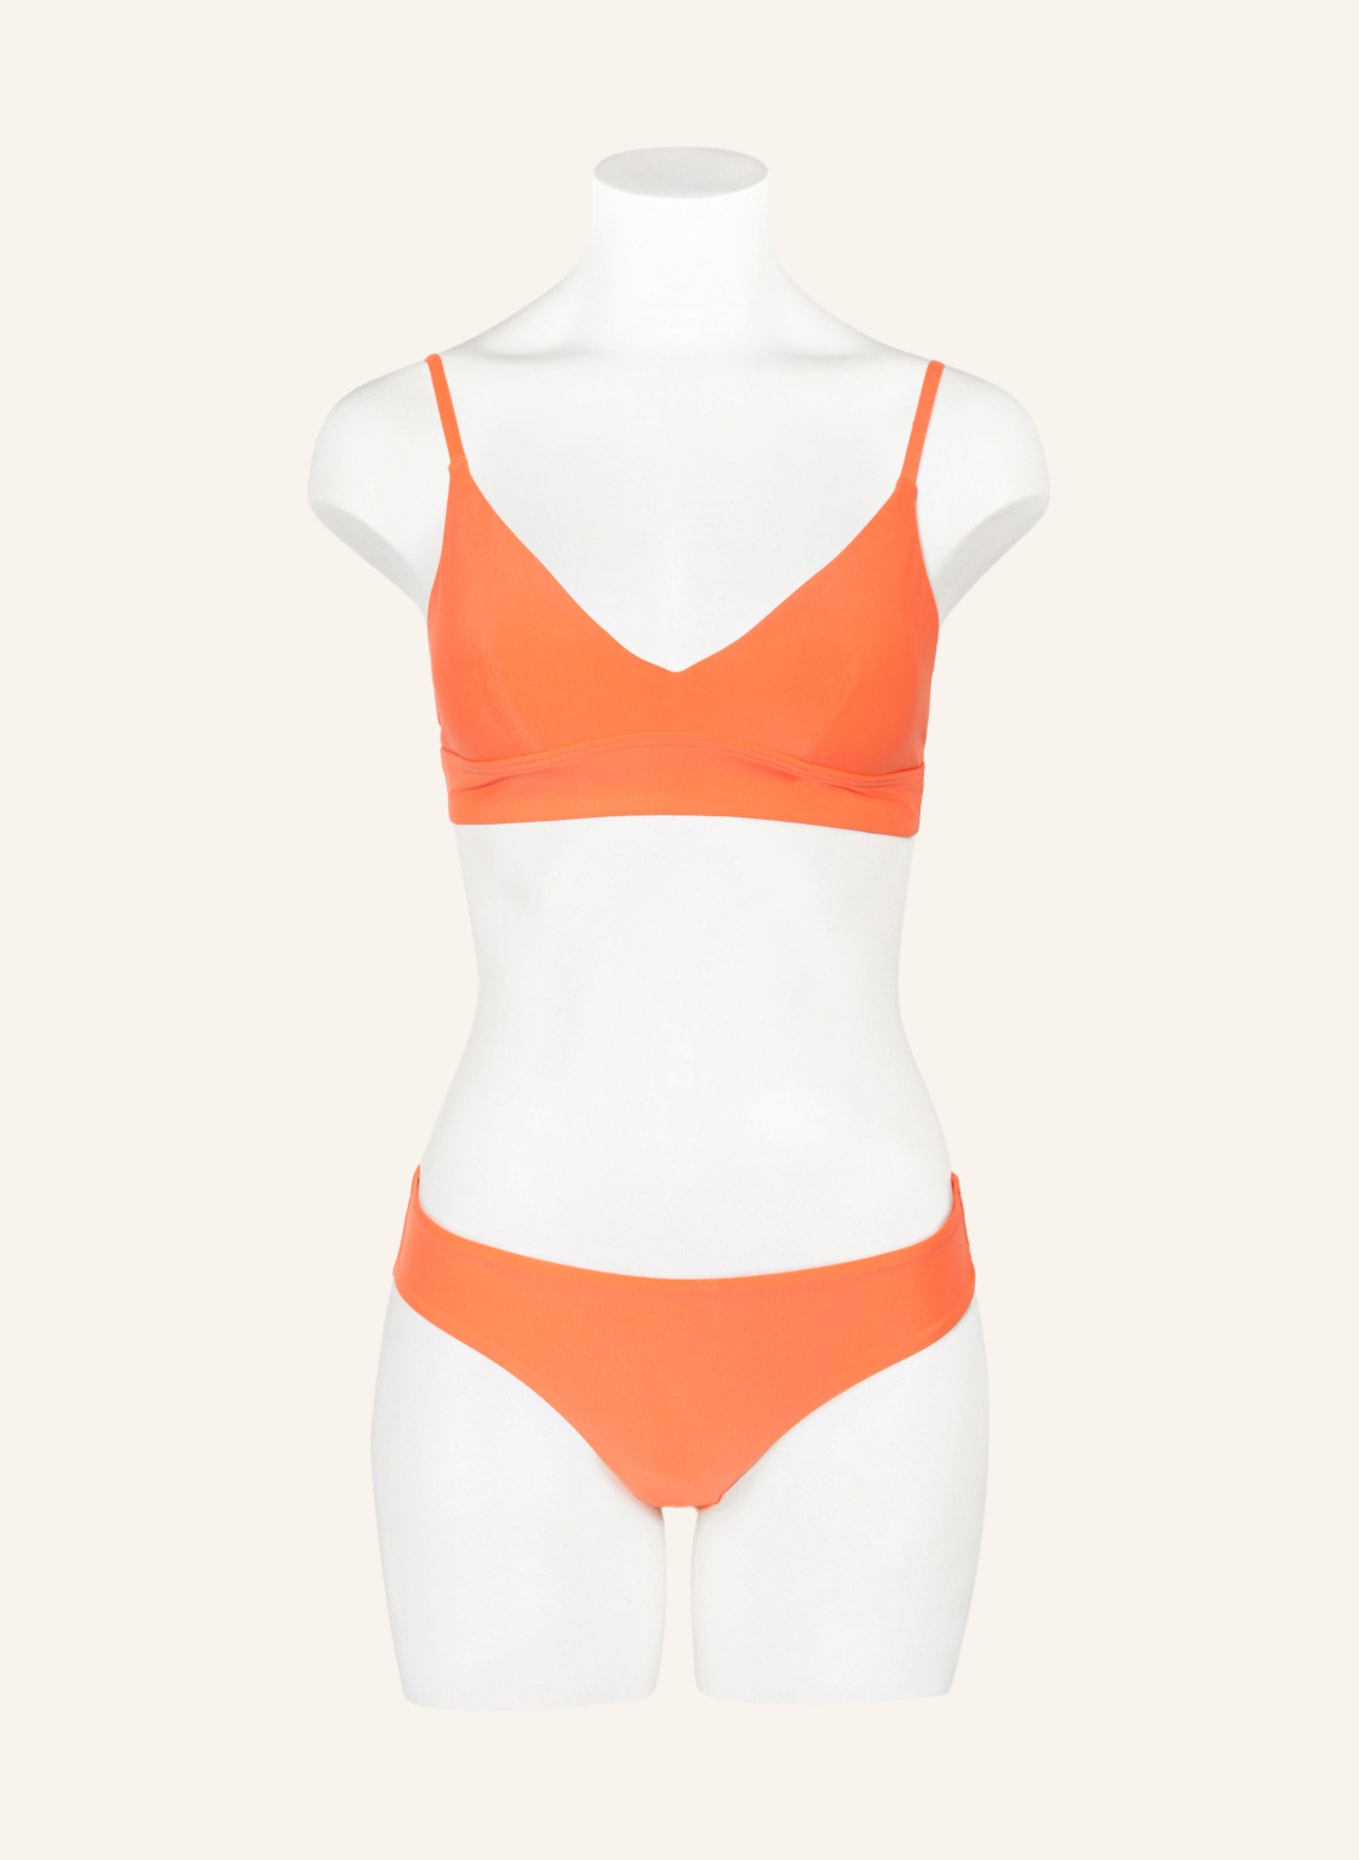 O'NEILL Bralette bikini top WAVE in neon orange